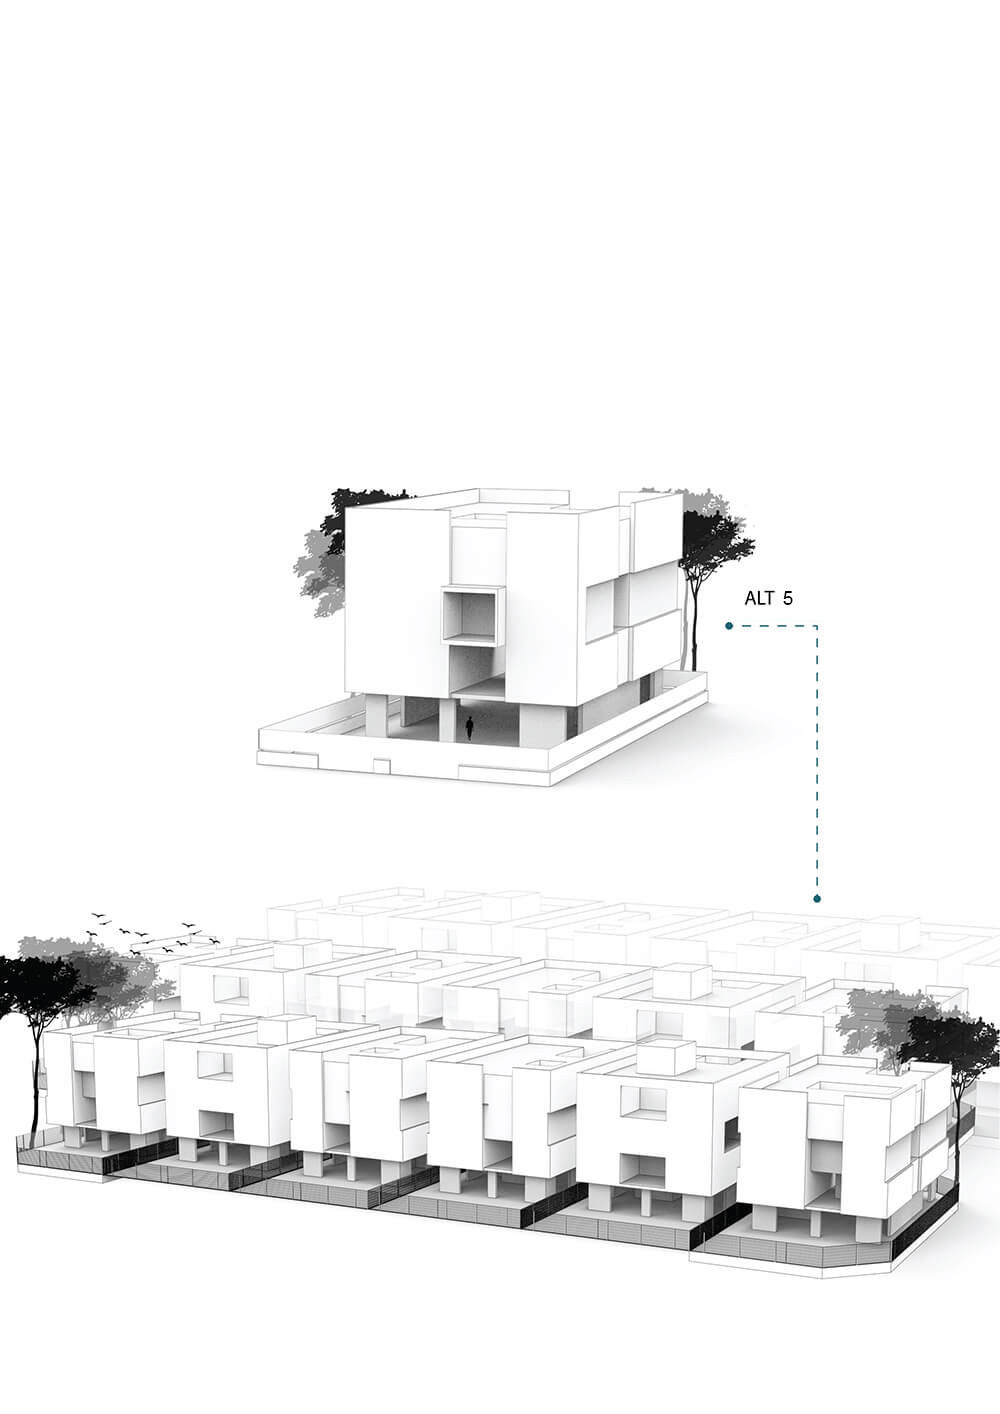 picture no. 3 ofkandovanpars complex Alt5 project, designed by Kambiz Moshtaq